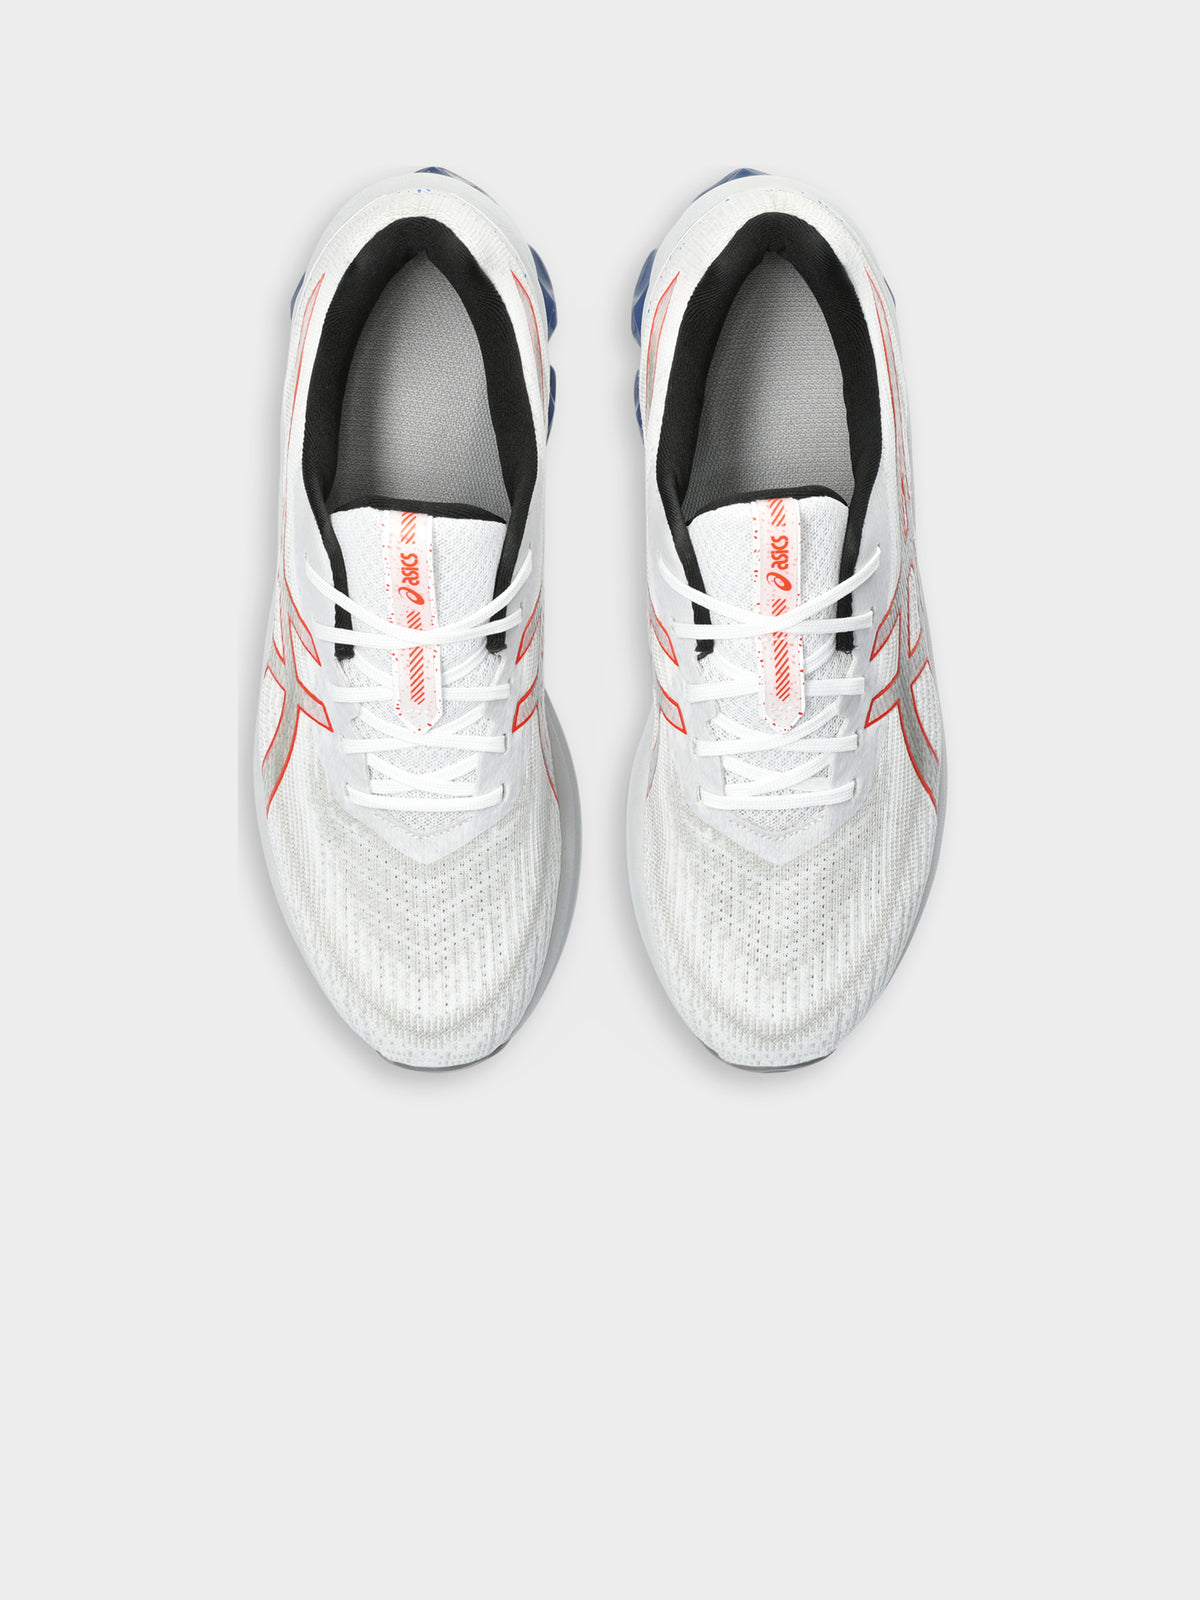 Unisex Gel-Quantum 180 Sneakers in White, Blue &amp; Red